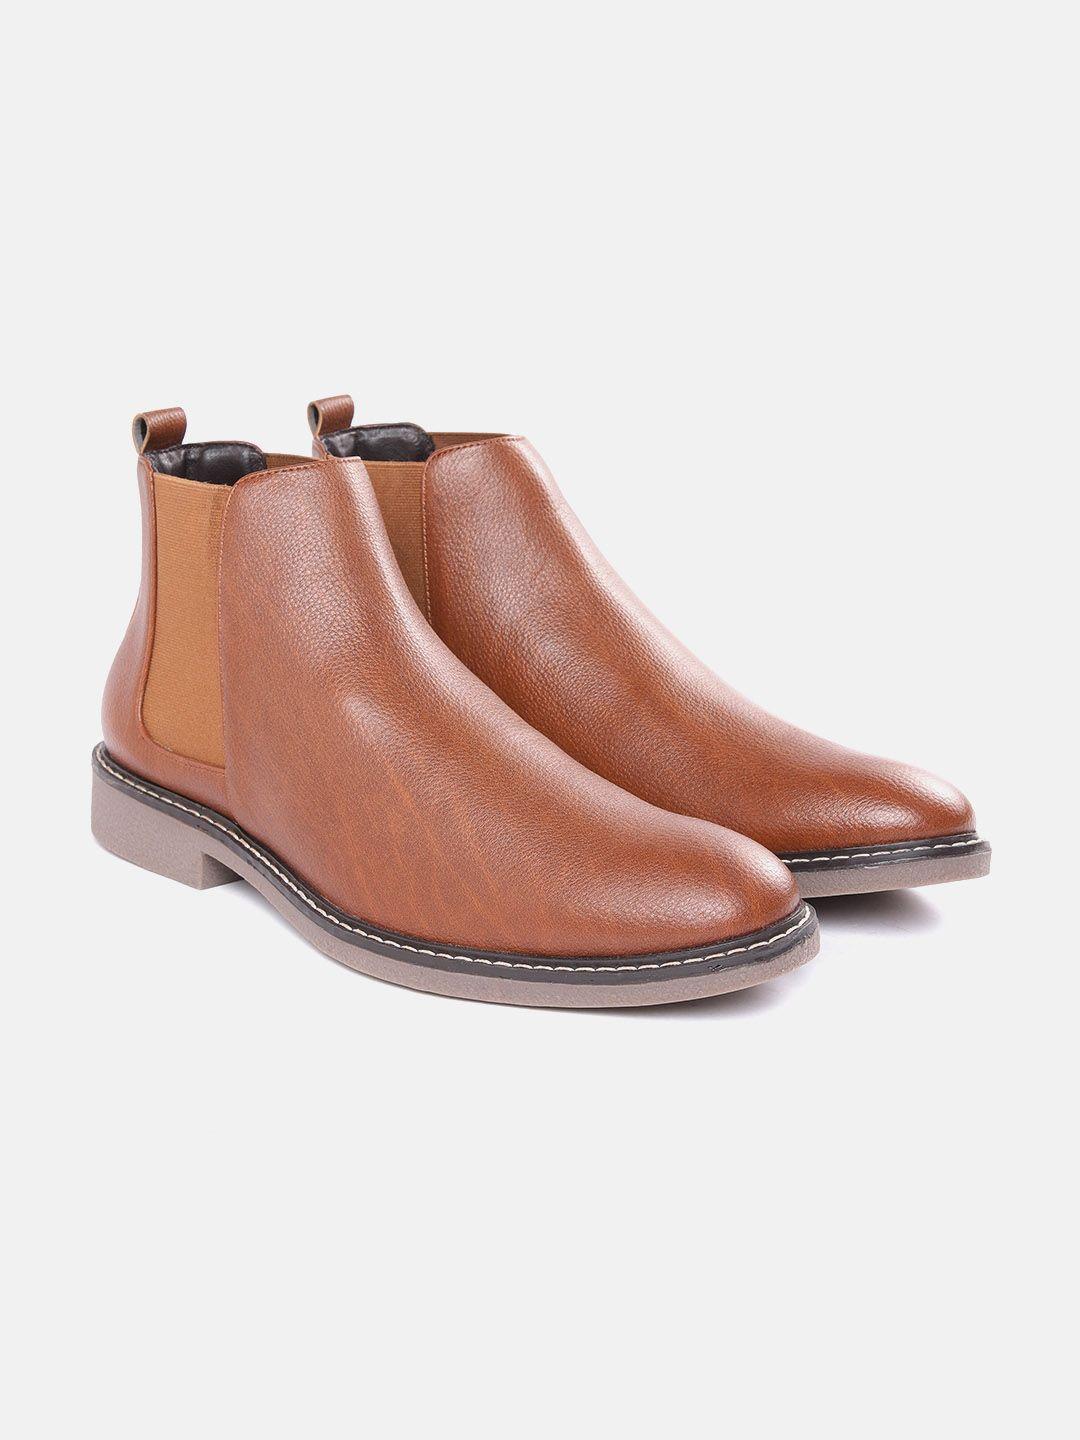 carlton london men tan brown solid mid-top chelsea boots